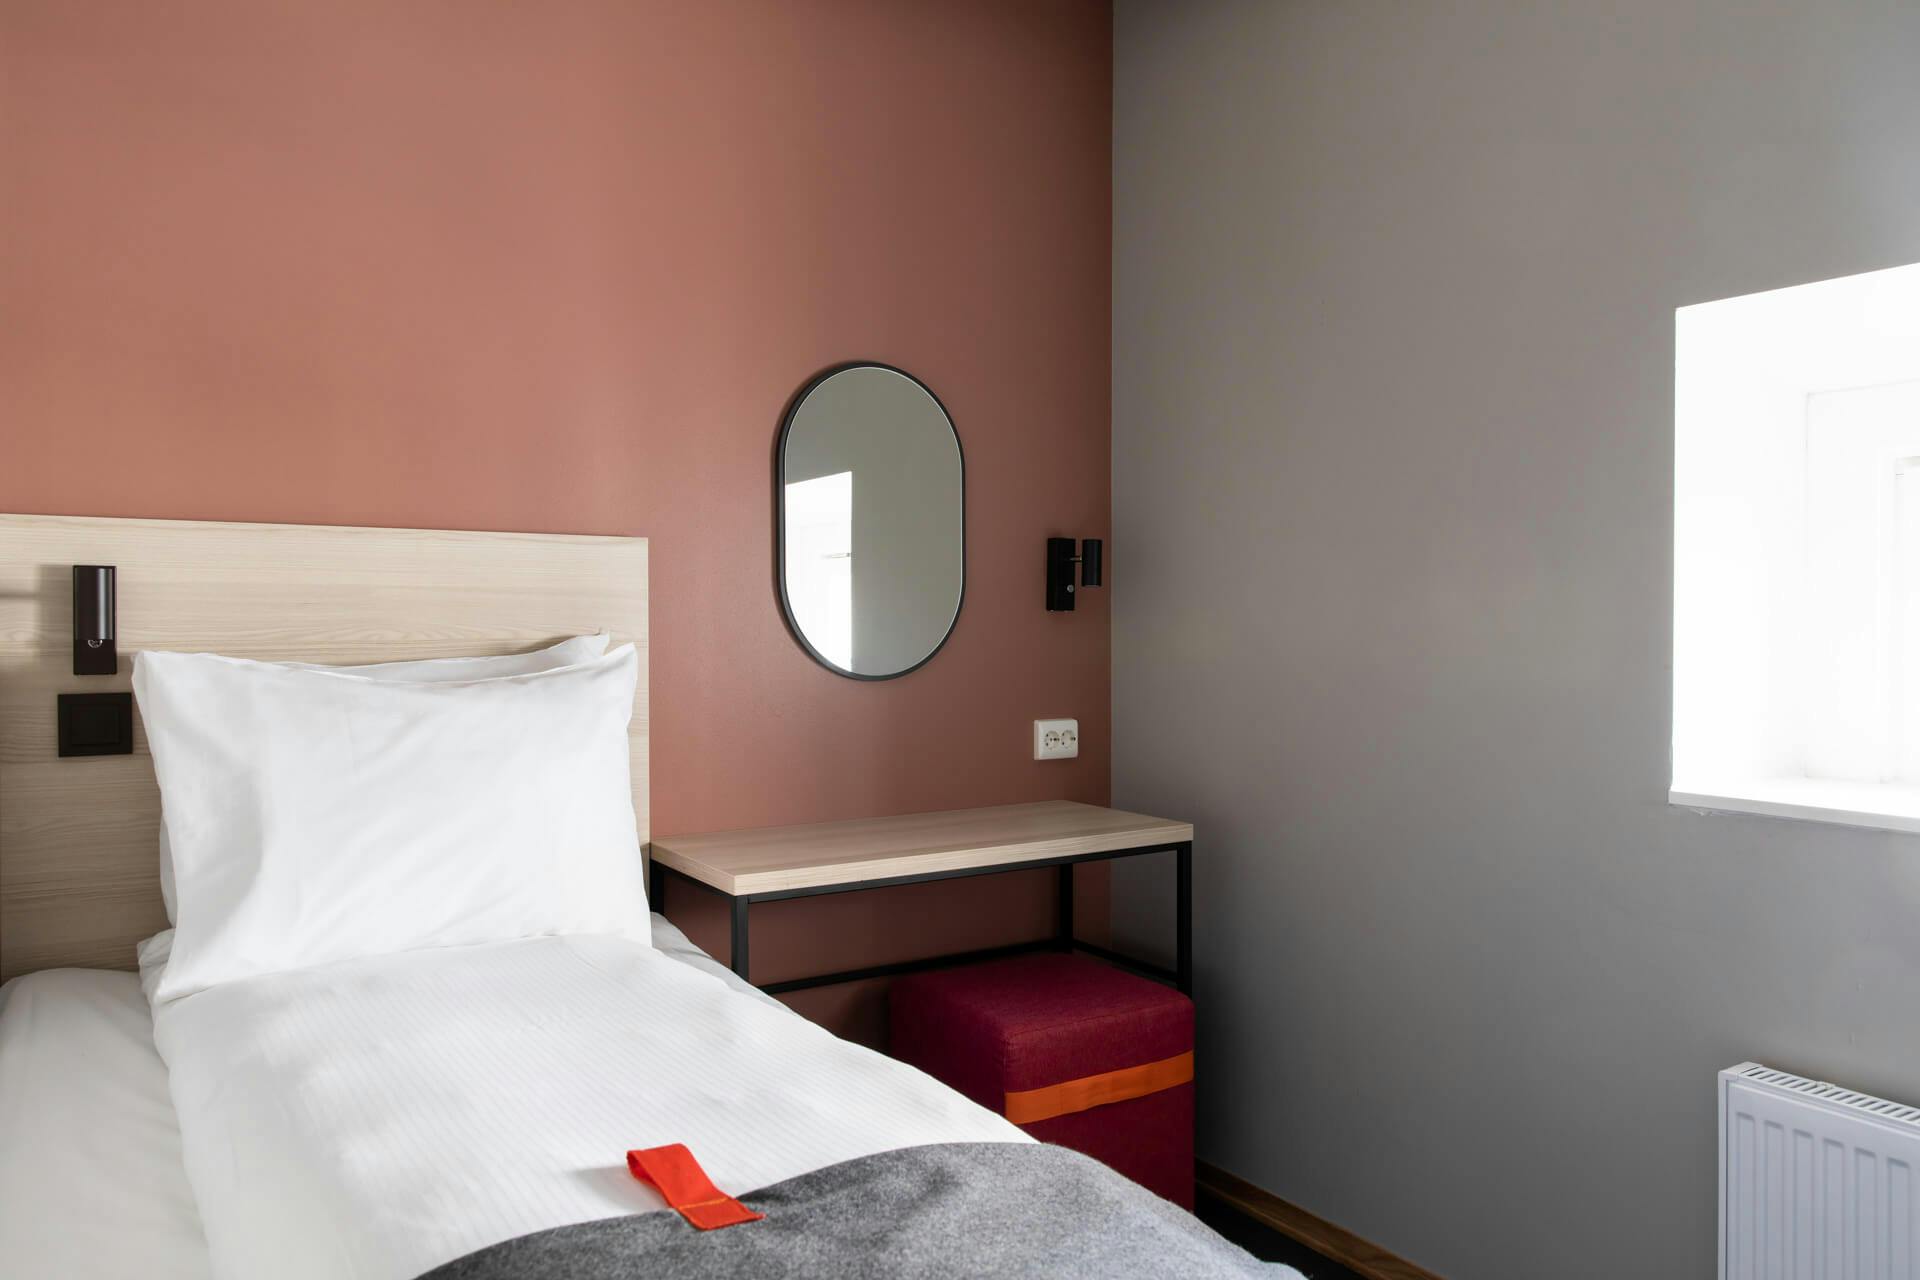 Single bed, desk, mirror, poof, orange wall